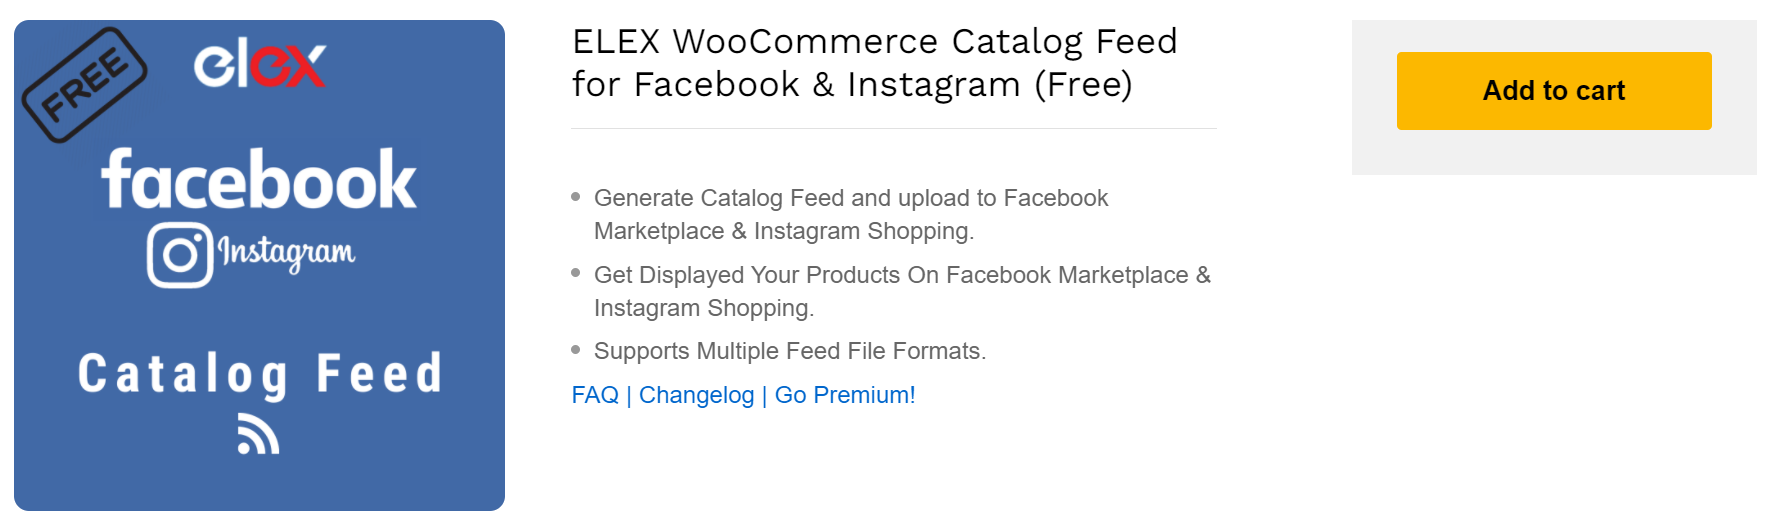 ELEX WooCommerce Catalog Feed for Facebook & Instagram | Facebook marketplace